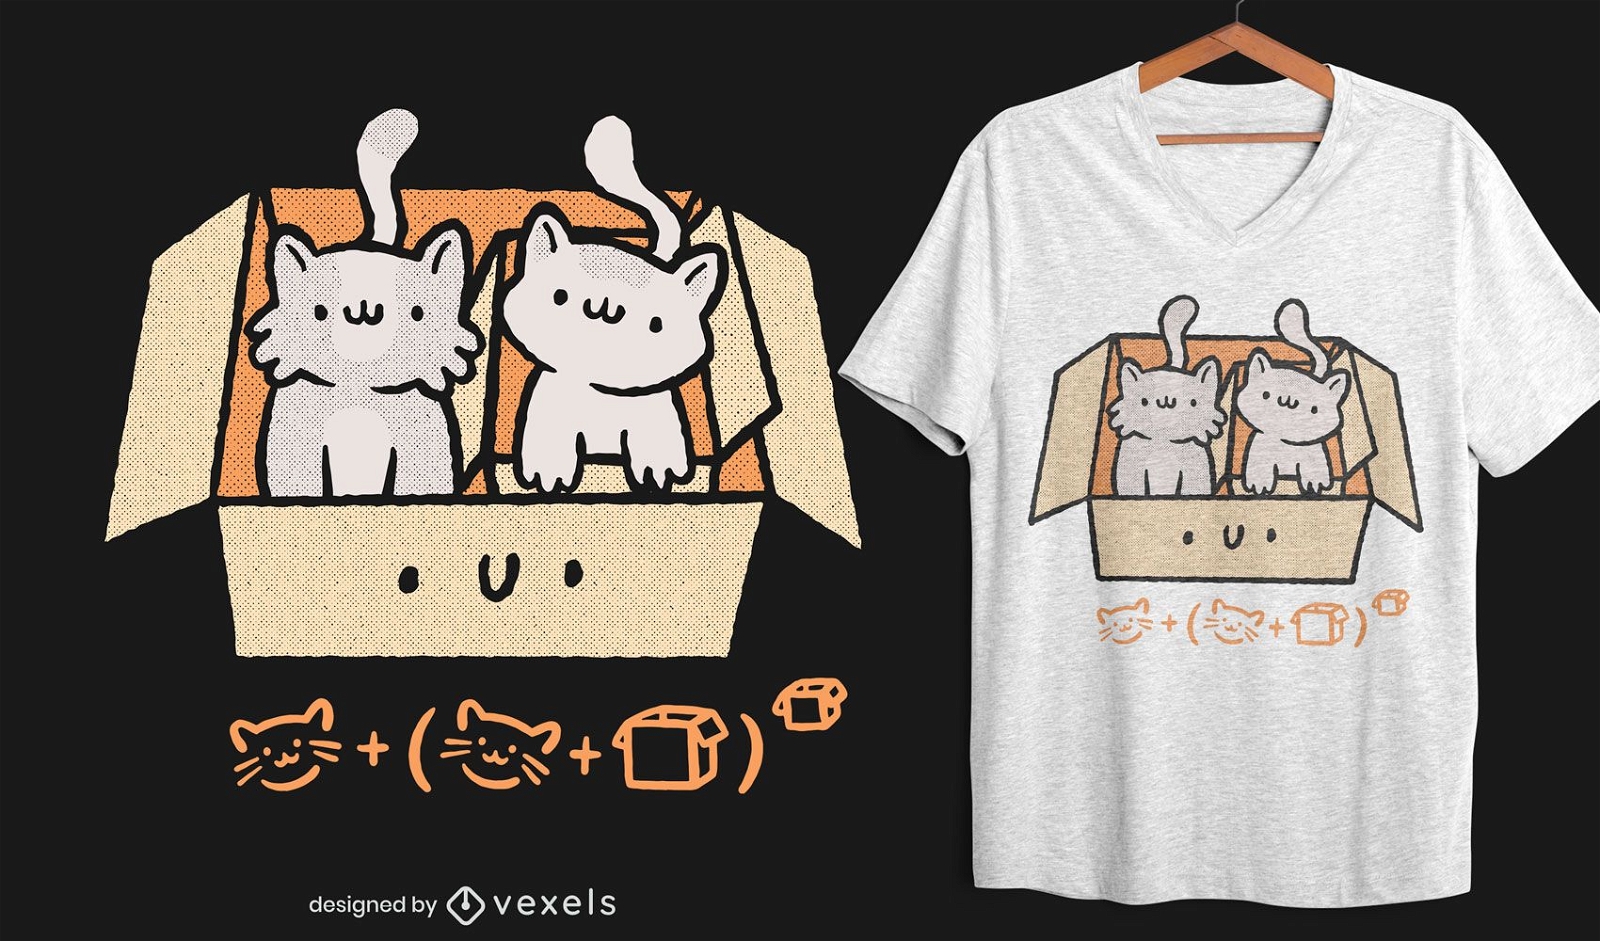 Box kittens t-shirt design